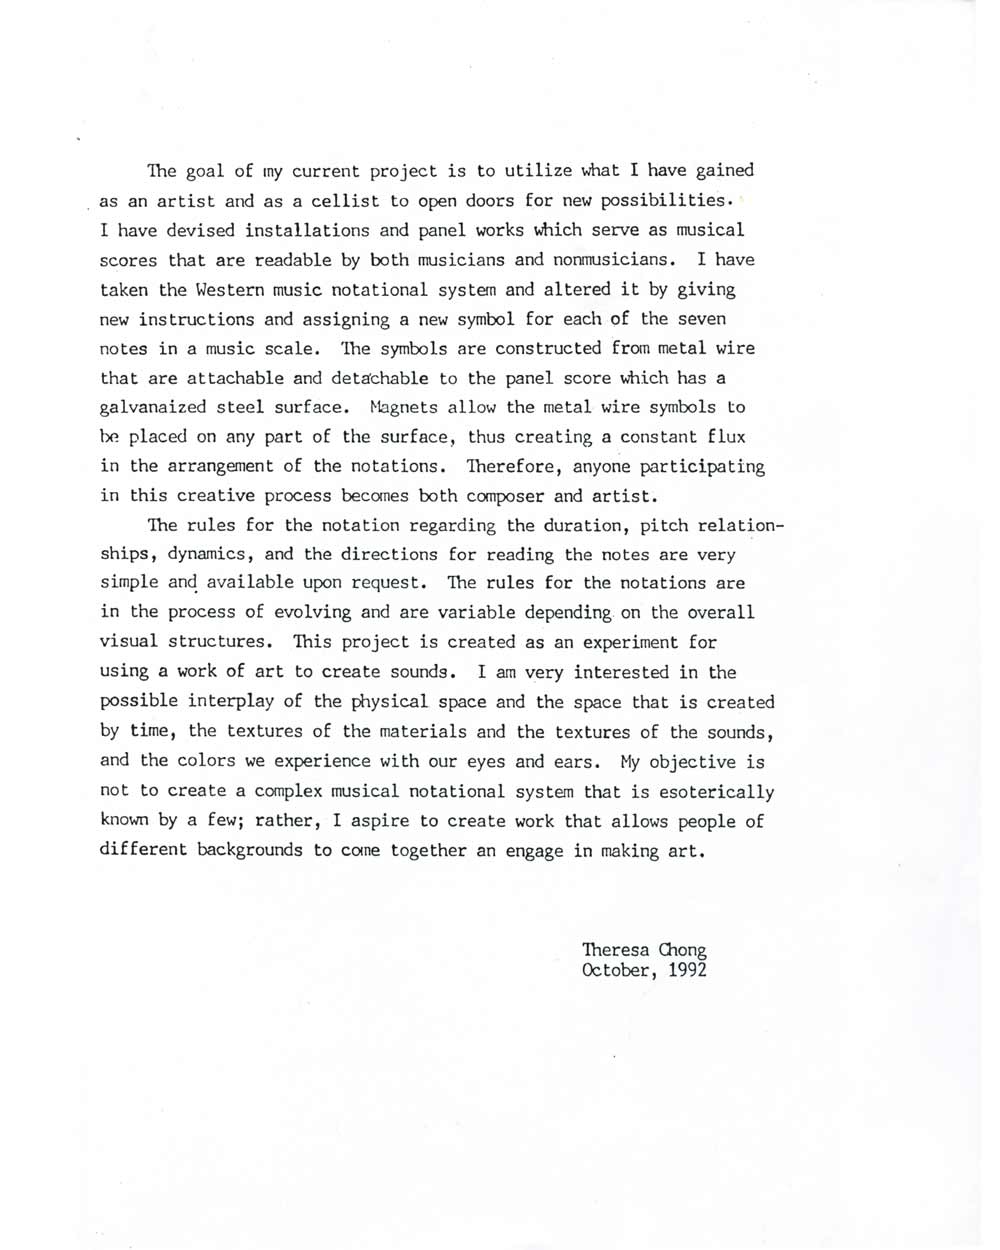 Theresa Chong's Artist Statement, pg 2